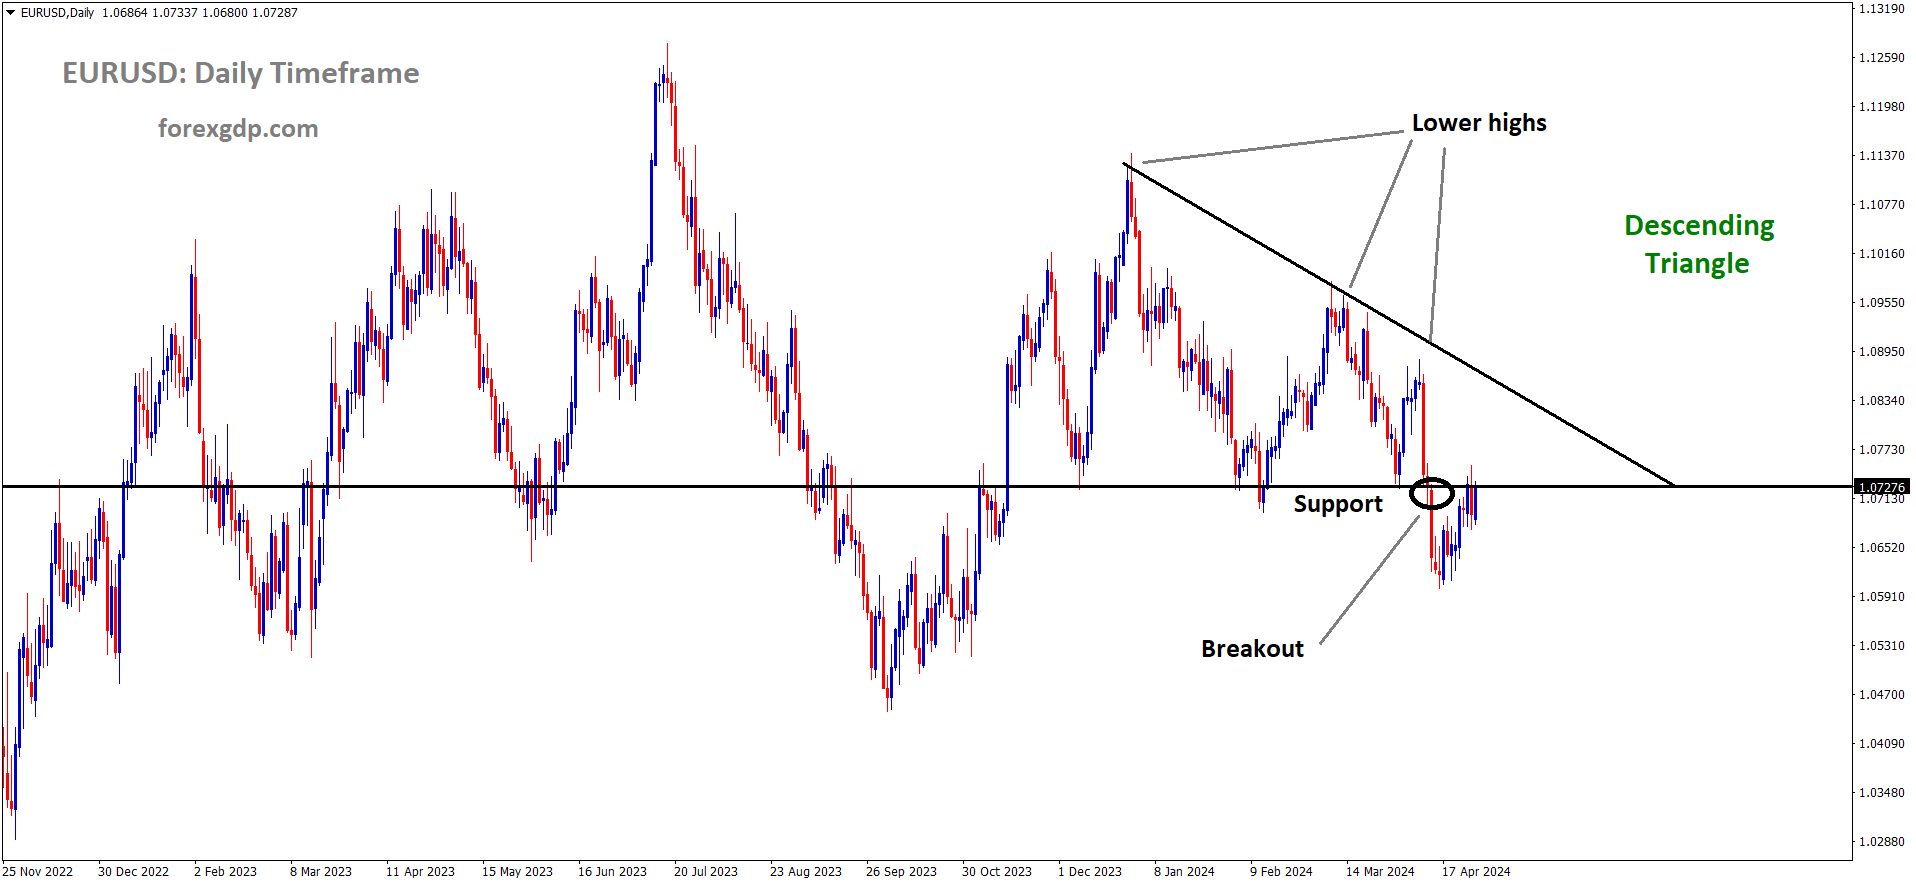 EURUSD has broken Descending Triangle in downside